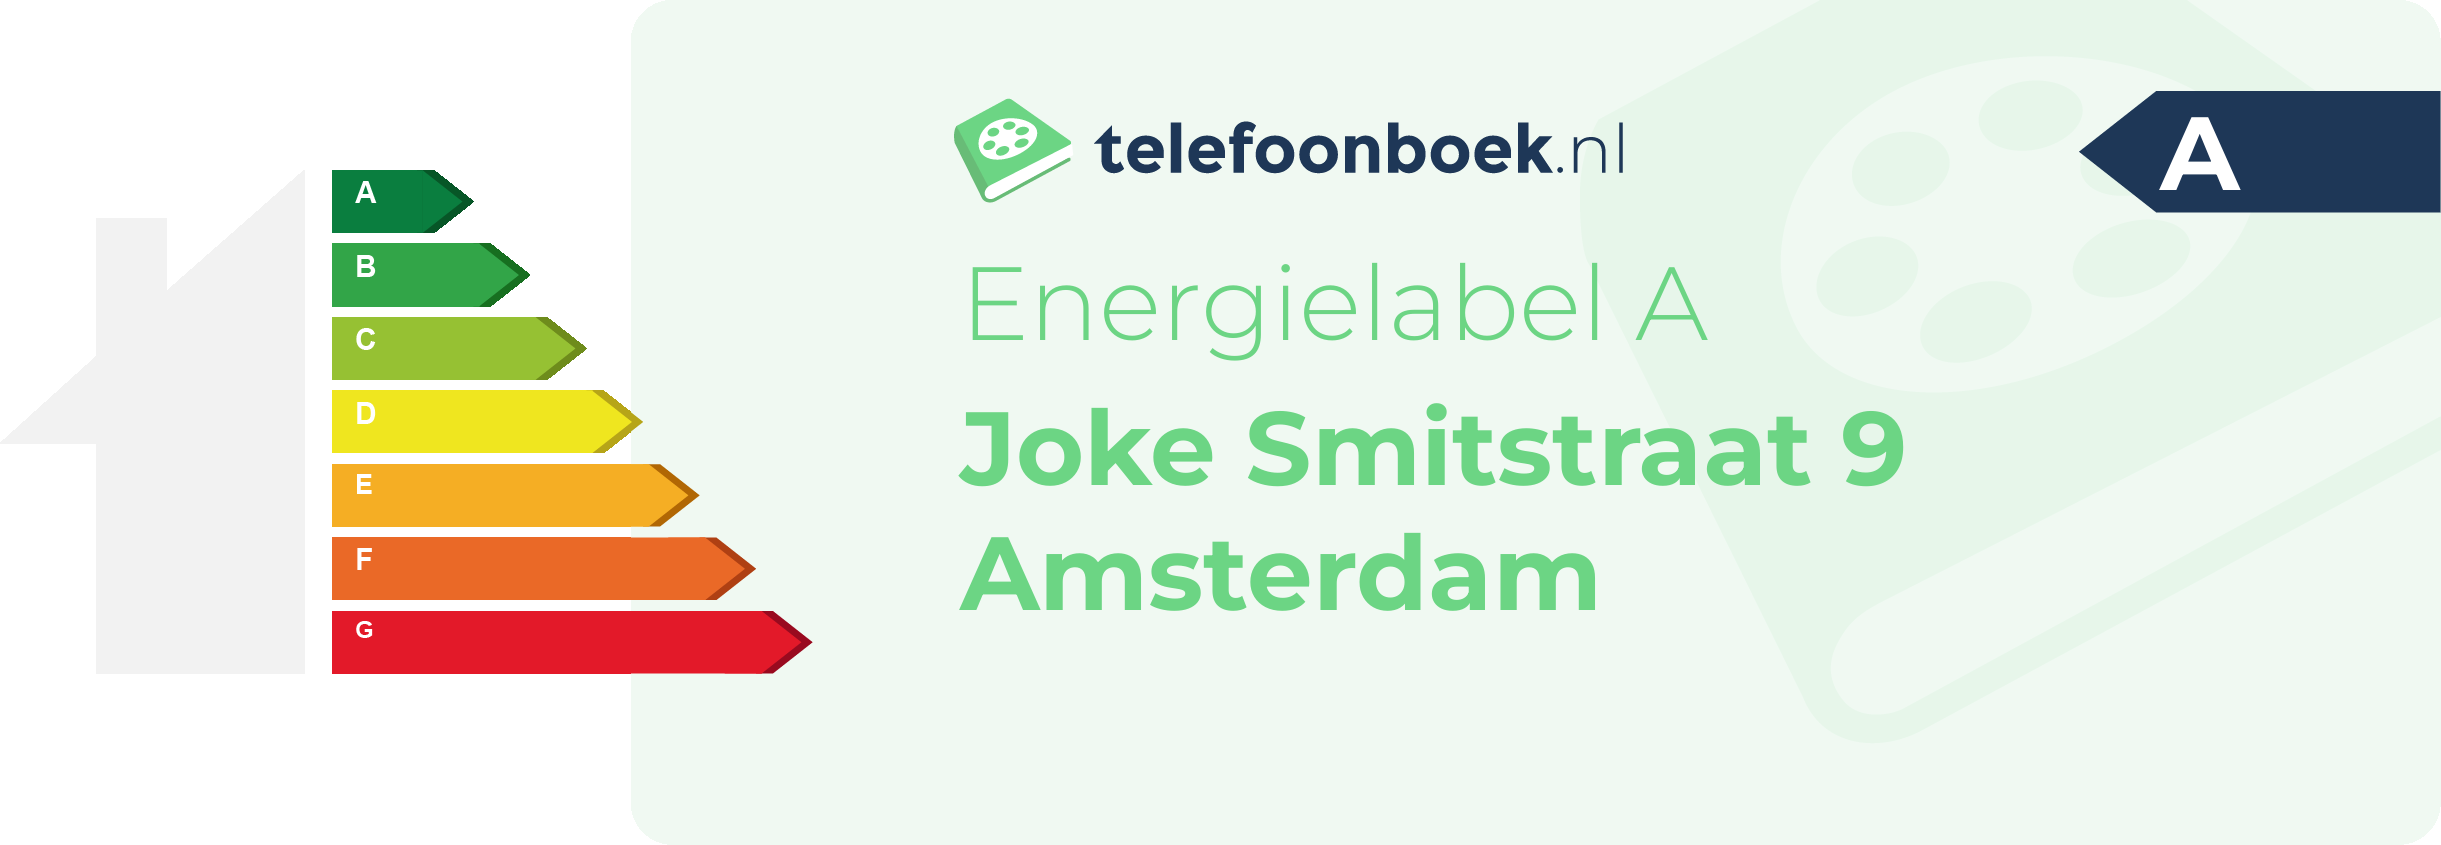 Energielabel Joke Smitstraat 9 Amsterdam